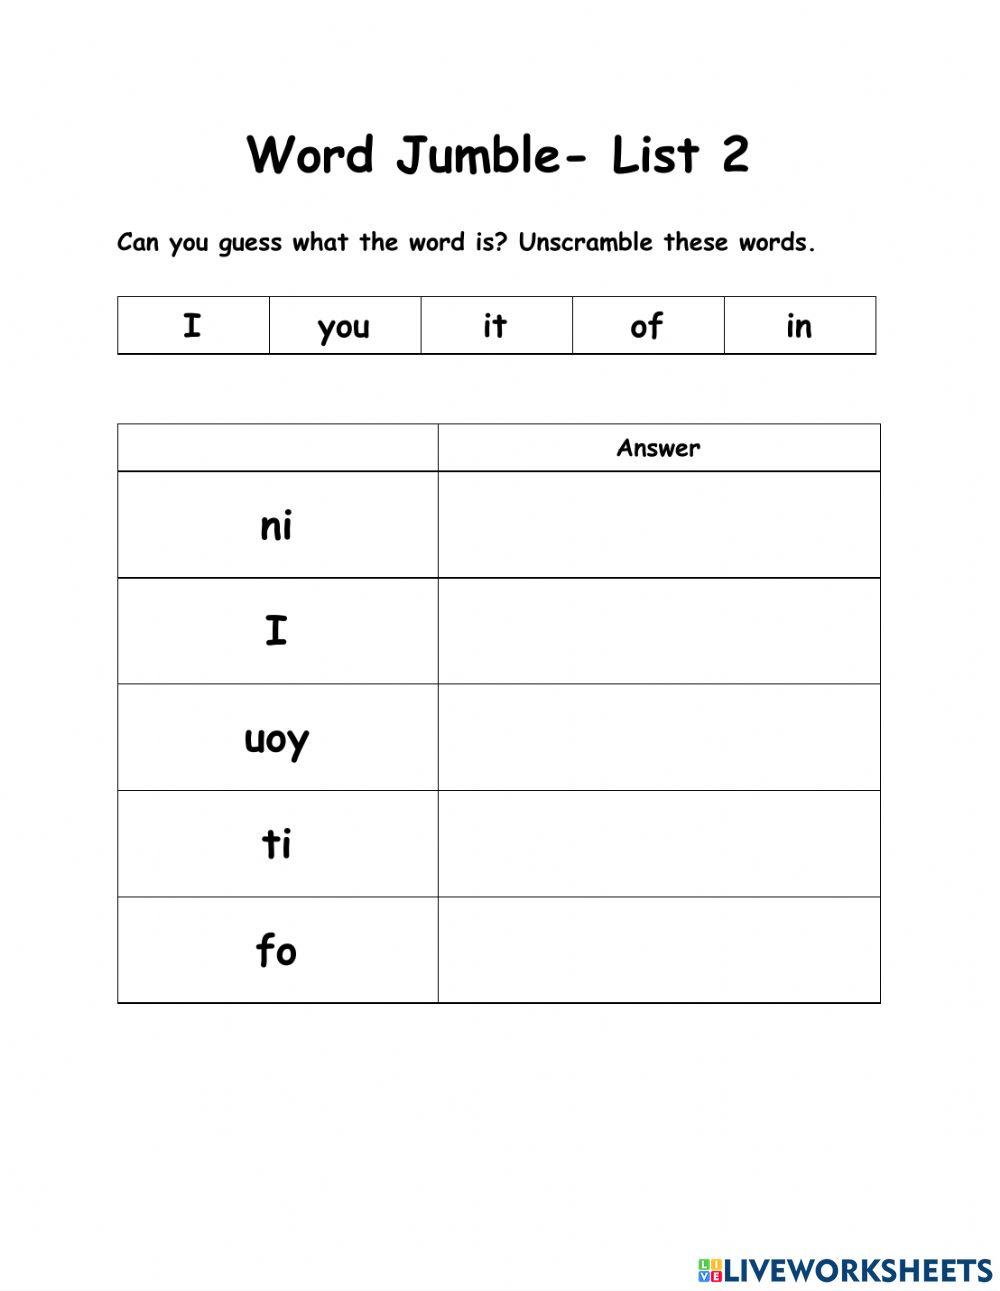 WOW - 5 Words - List 2 - Word Jumble